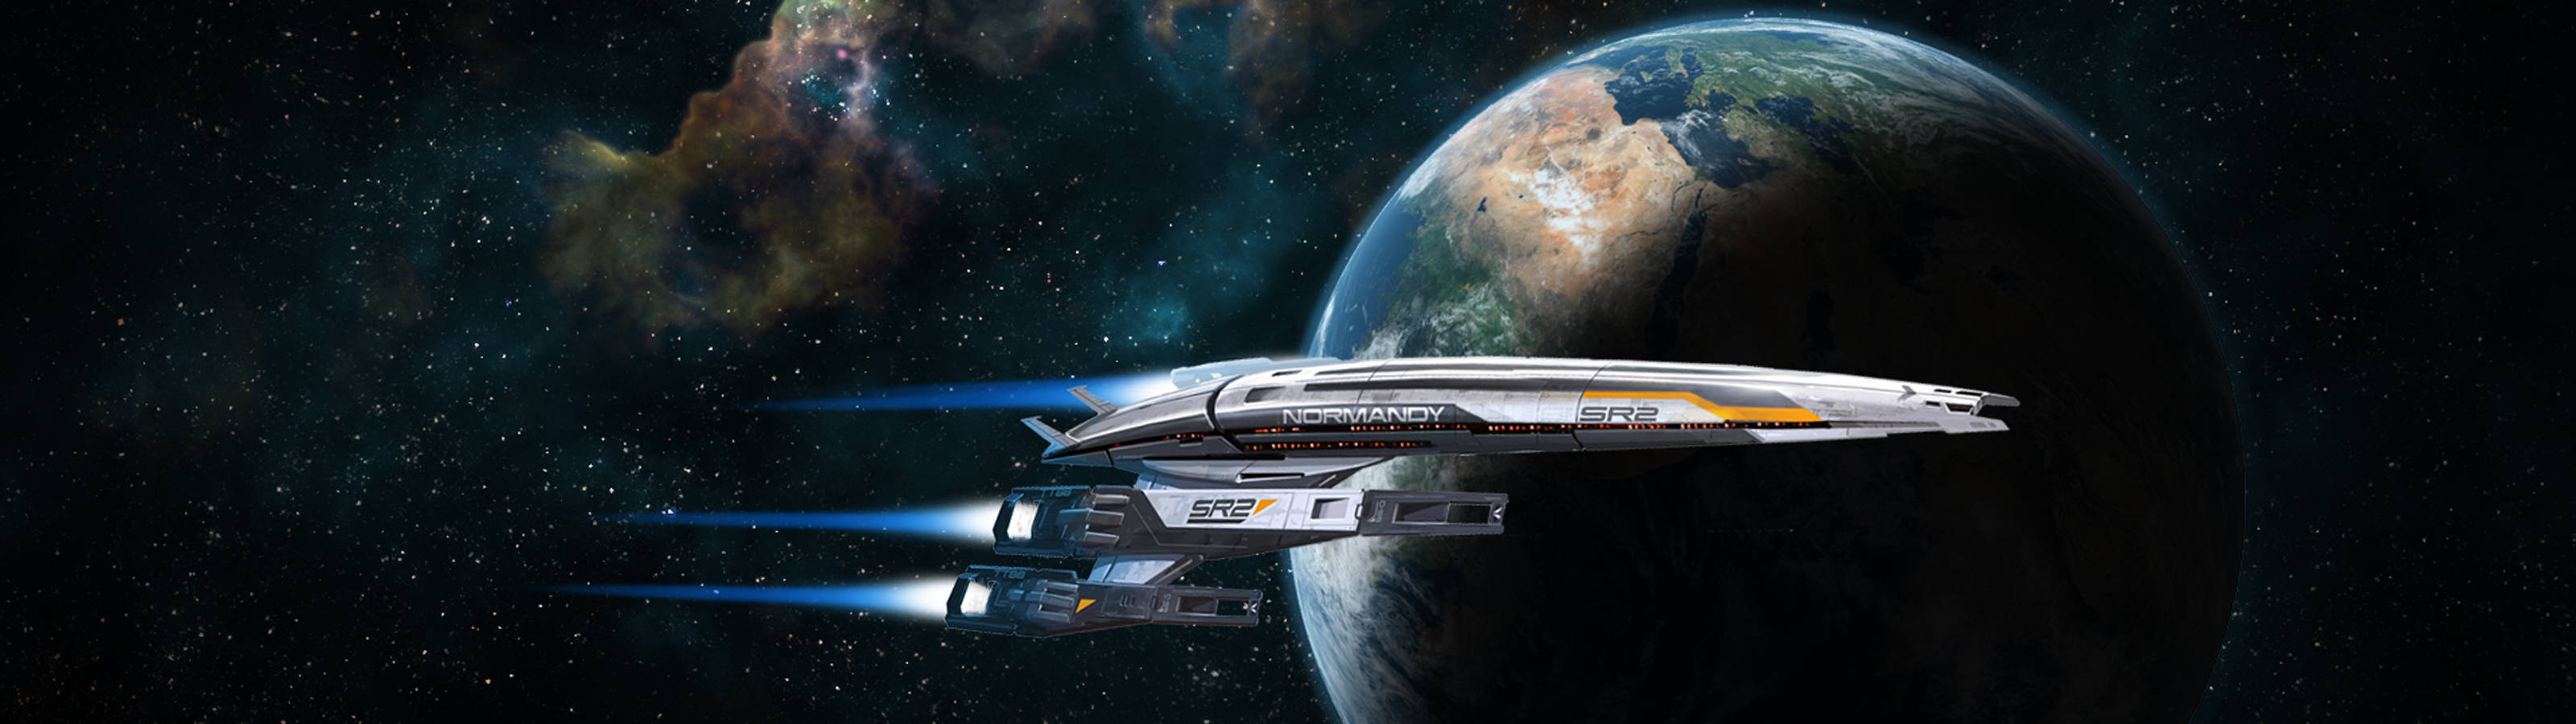 Mass Effect Ship In 4k Wallpaper